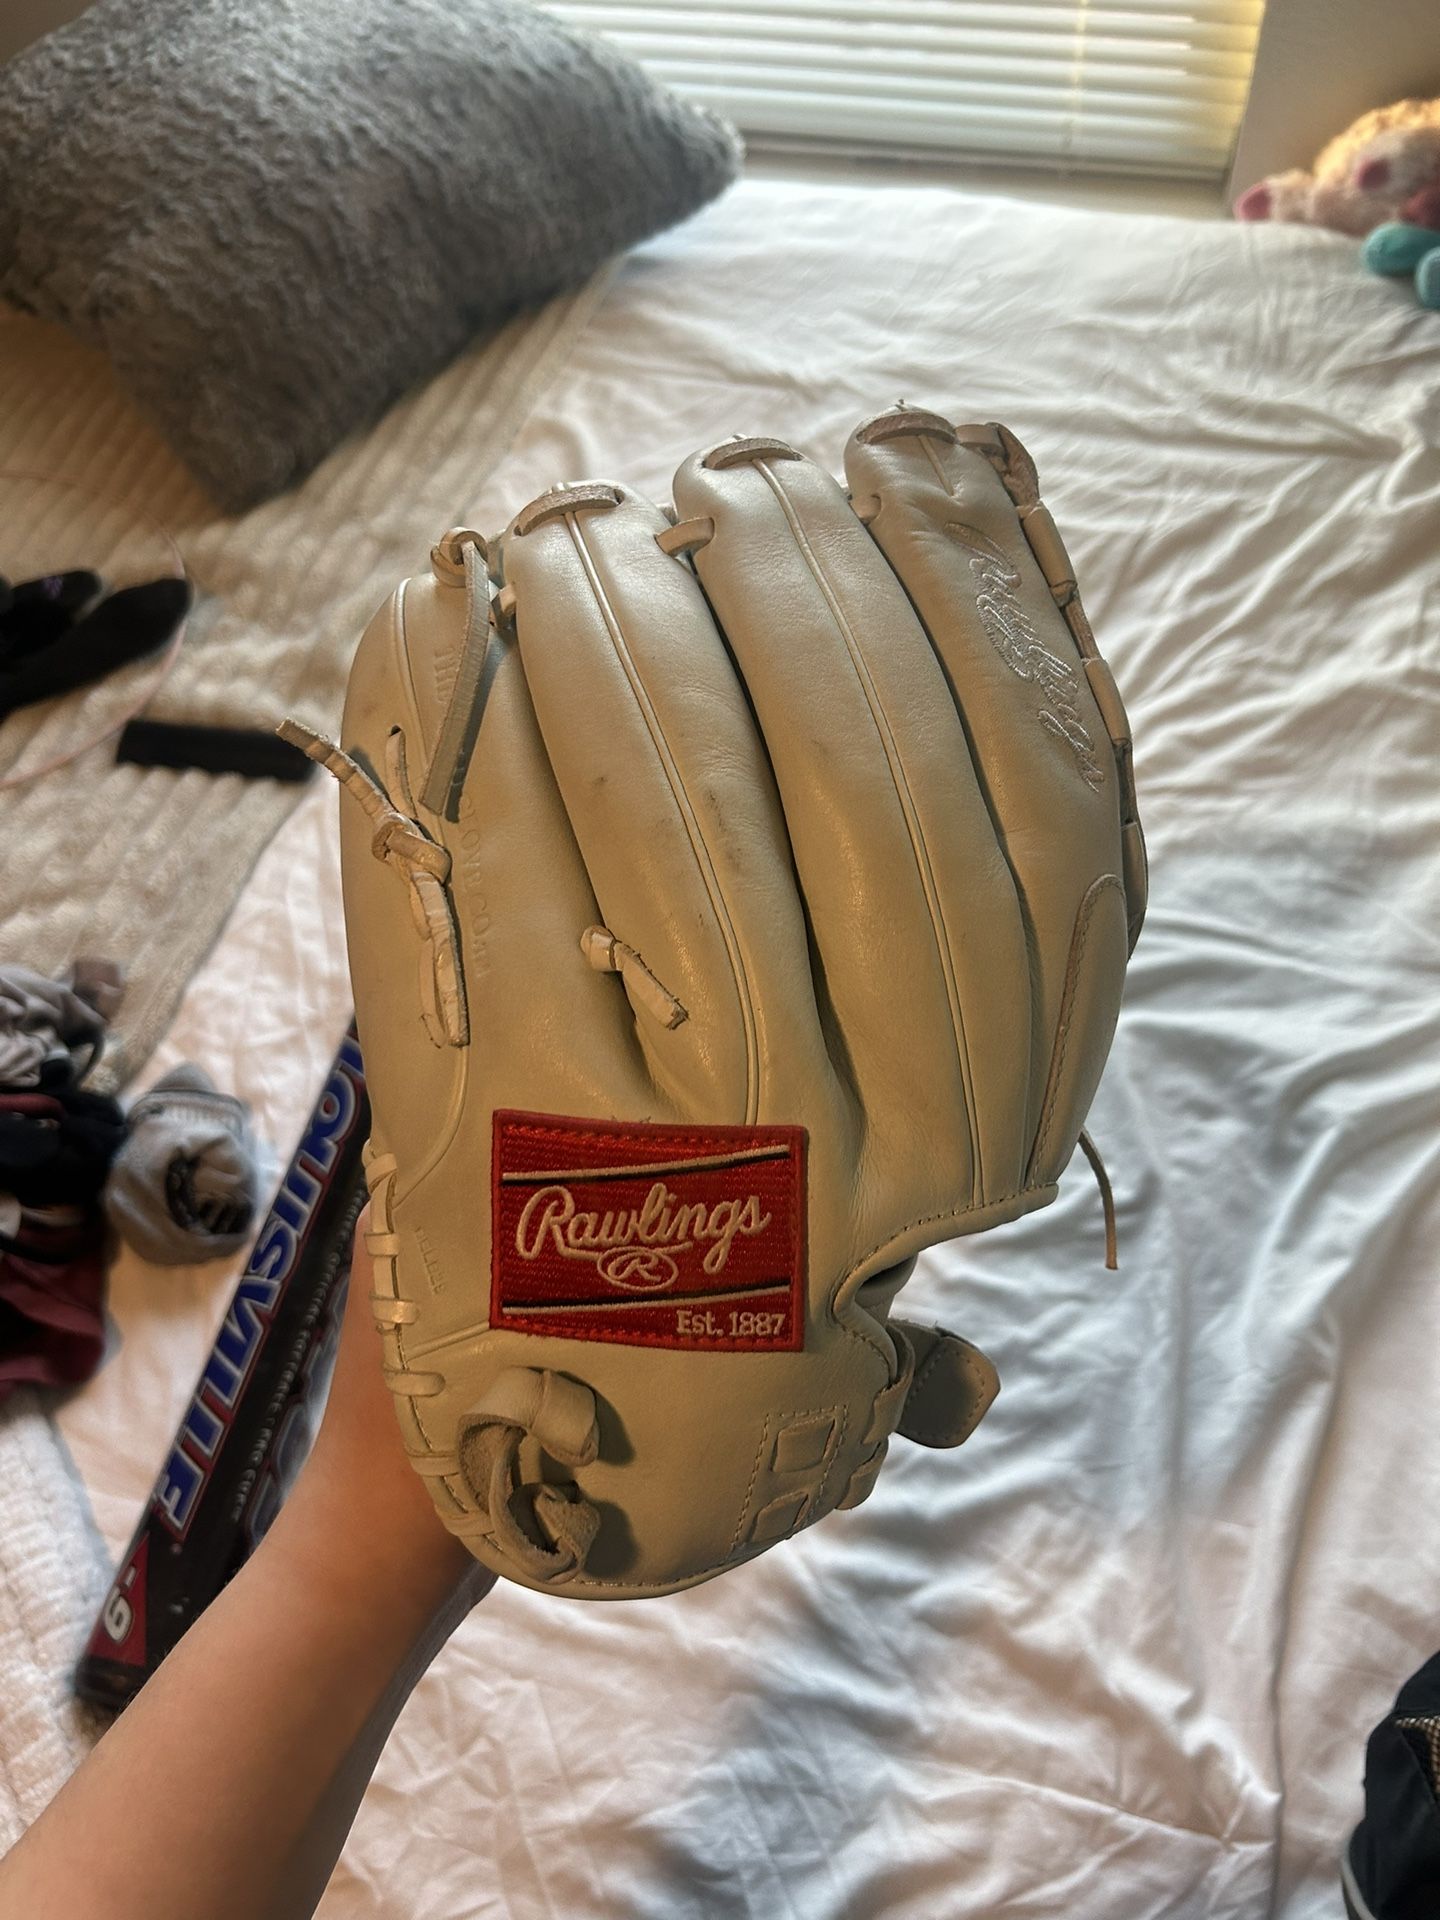 12.5 Softball Glove